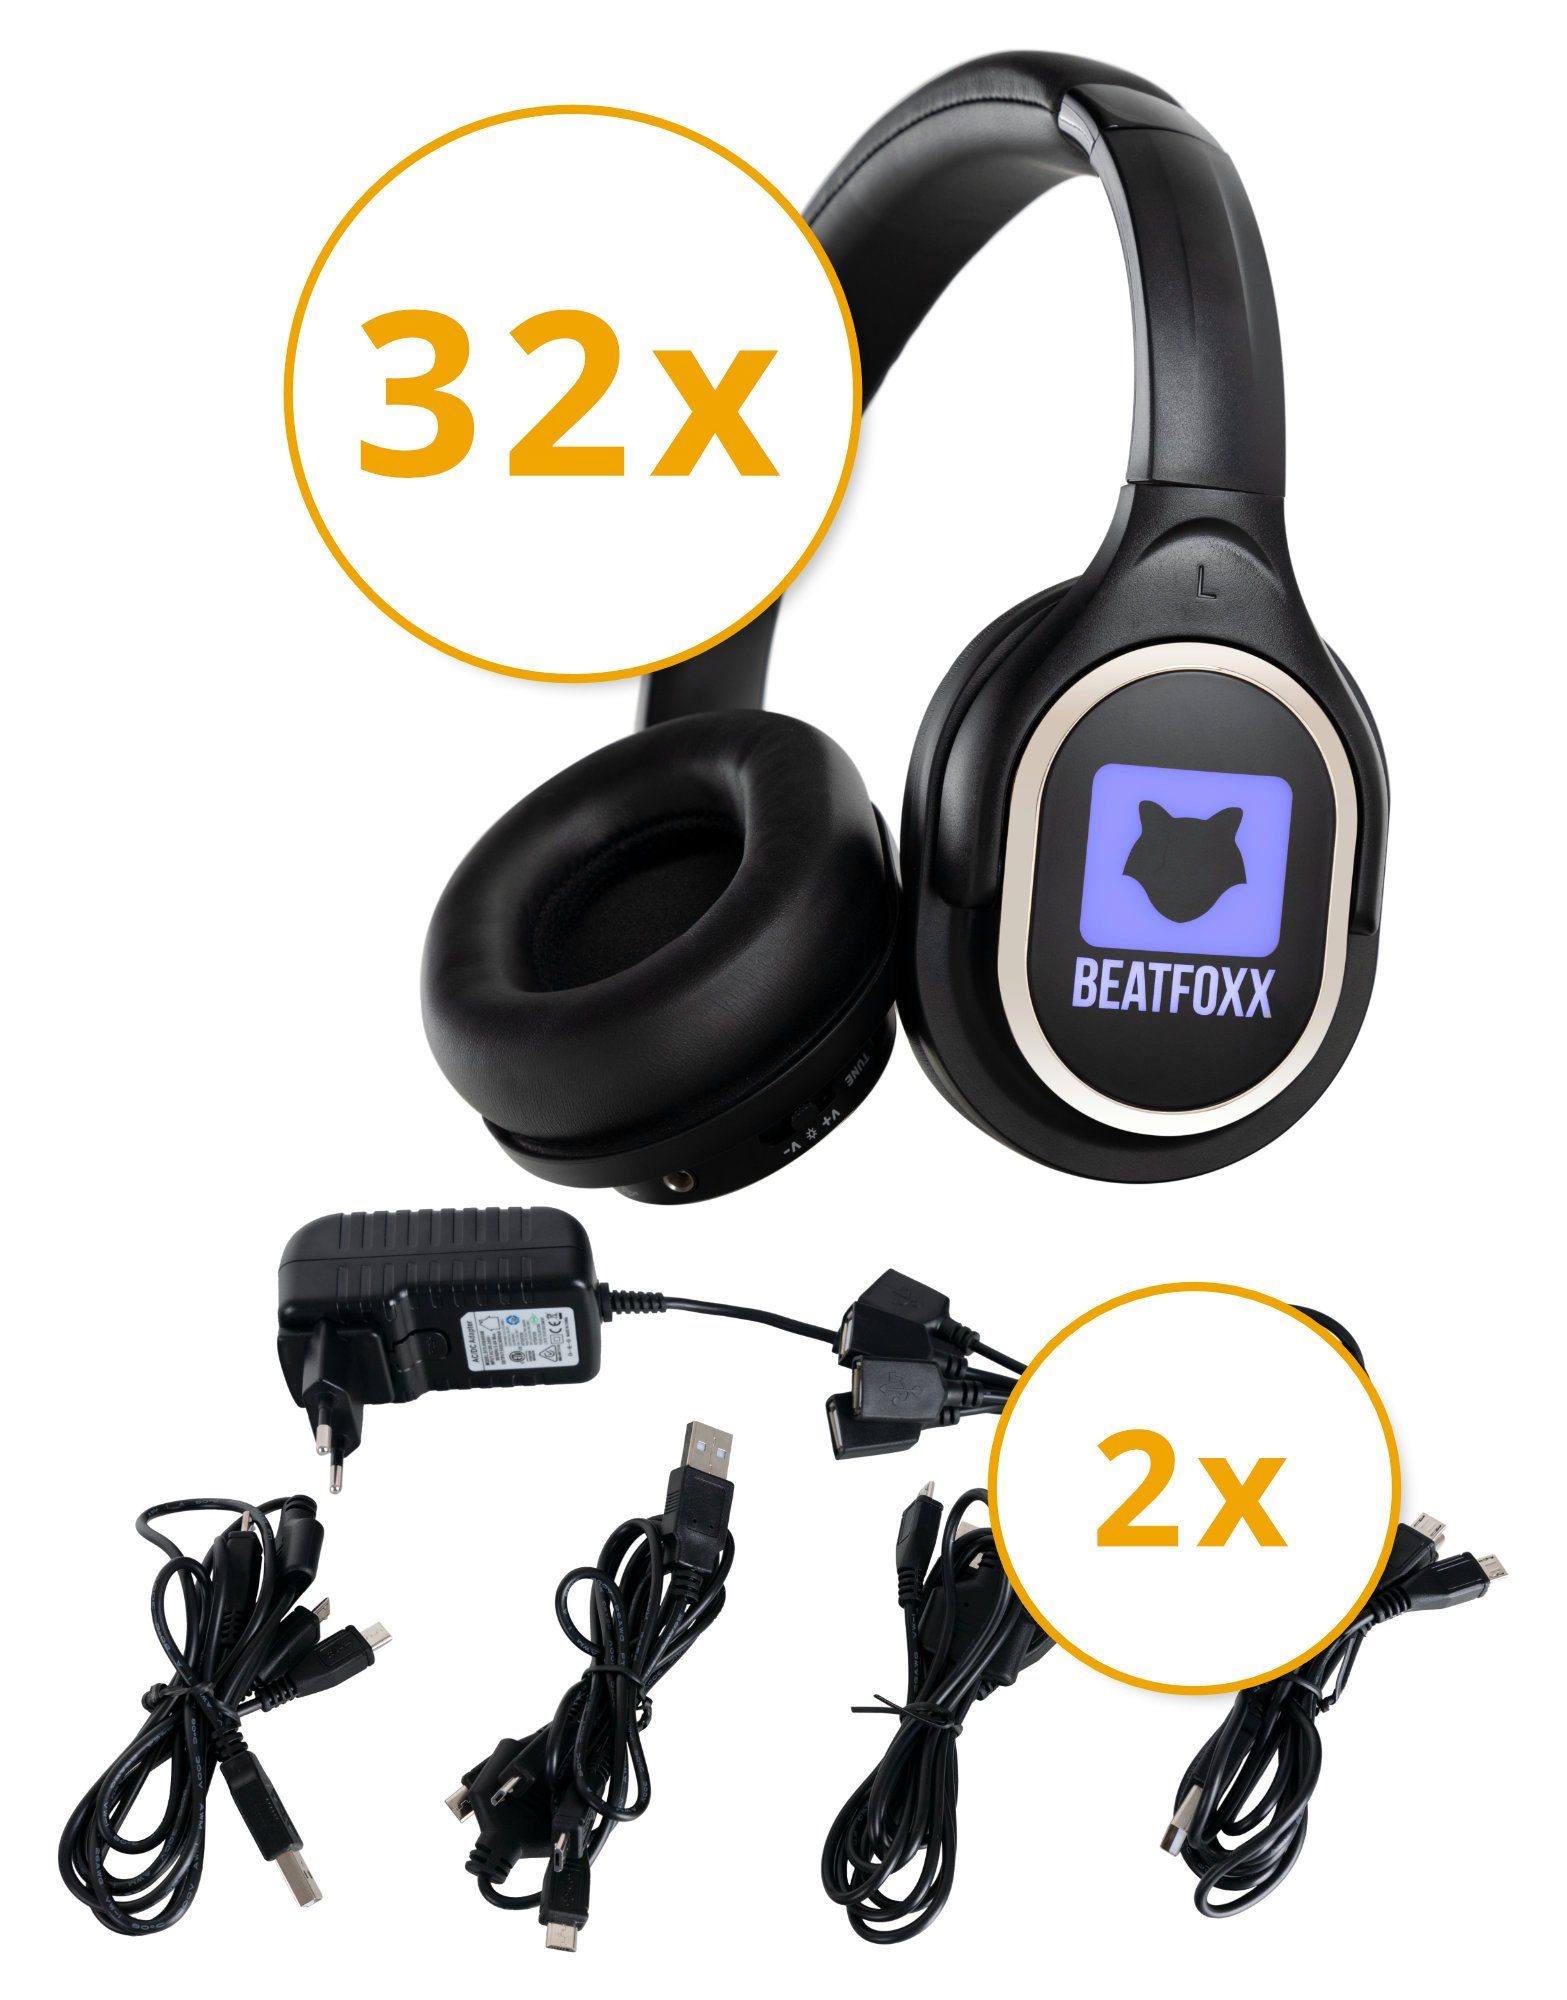 Beatfoxx SDH-340 Silent mit für Silent empfangbare Ladegeräte UHF-Technik, Stereo V2 Funk-Kopfhörer Disco (Wireless Kopfhörern Kanäle) 32 & Set 2 Kopfhörer 3 Disco-Anwendungen